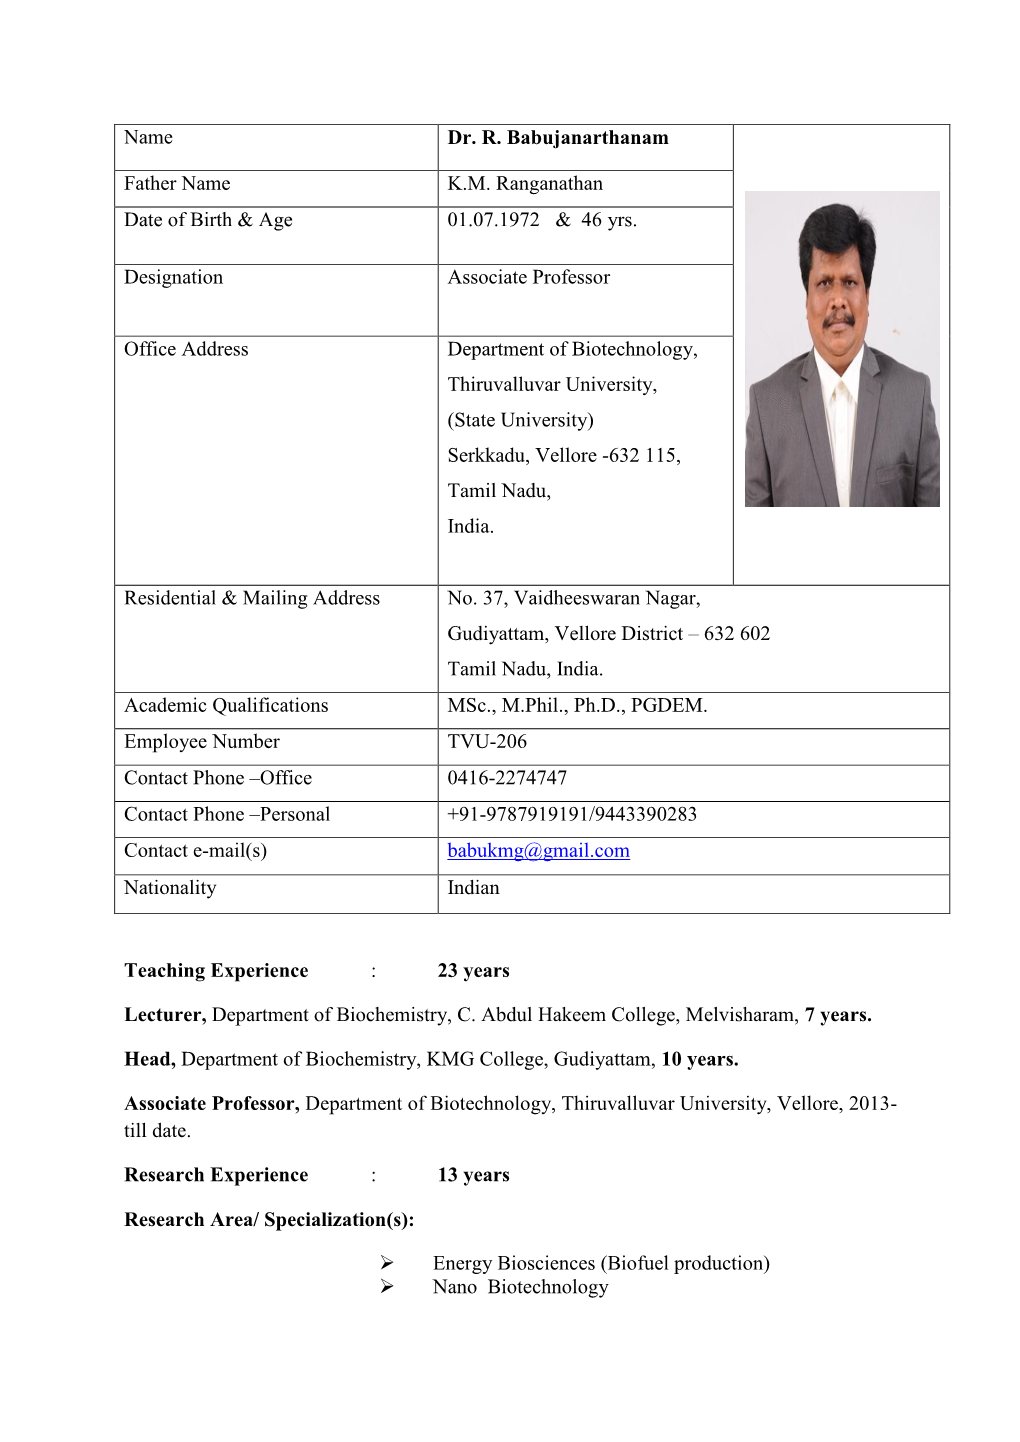 Name Dr. R. Babujanarthanam Father Name K.M. Ranganathan Date Of